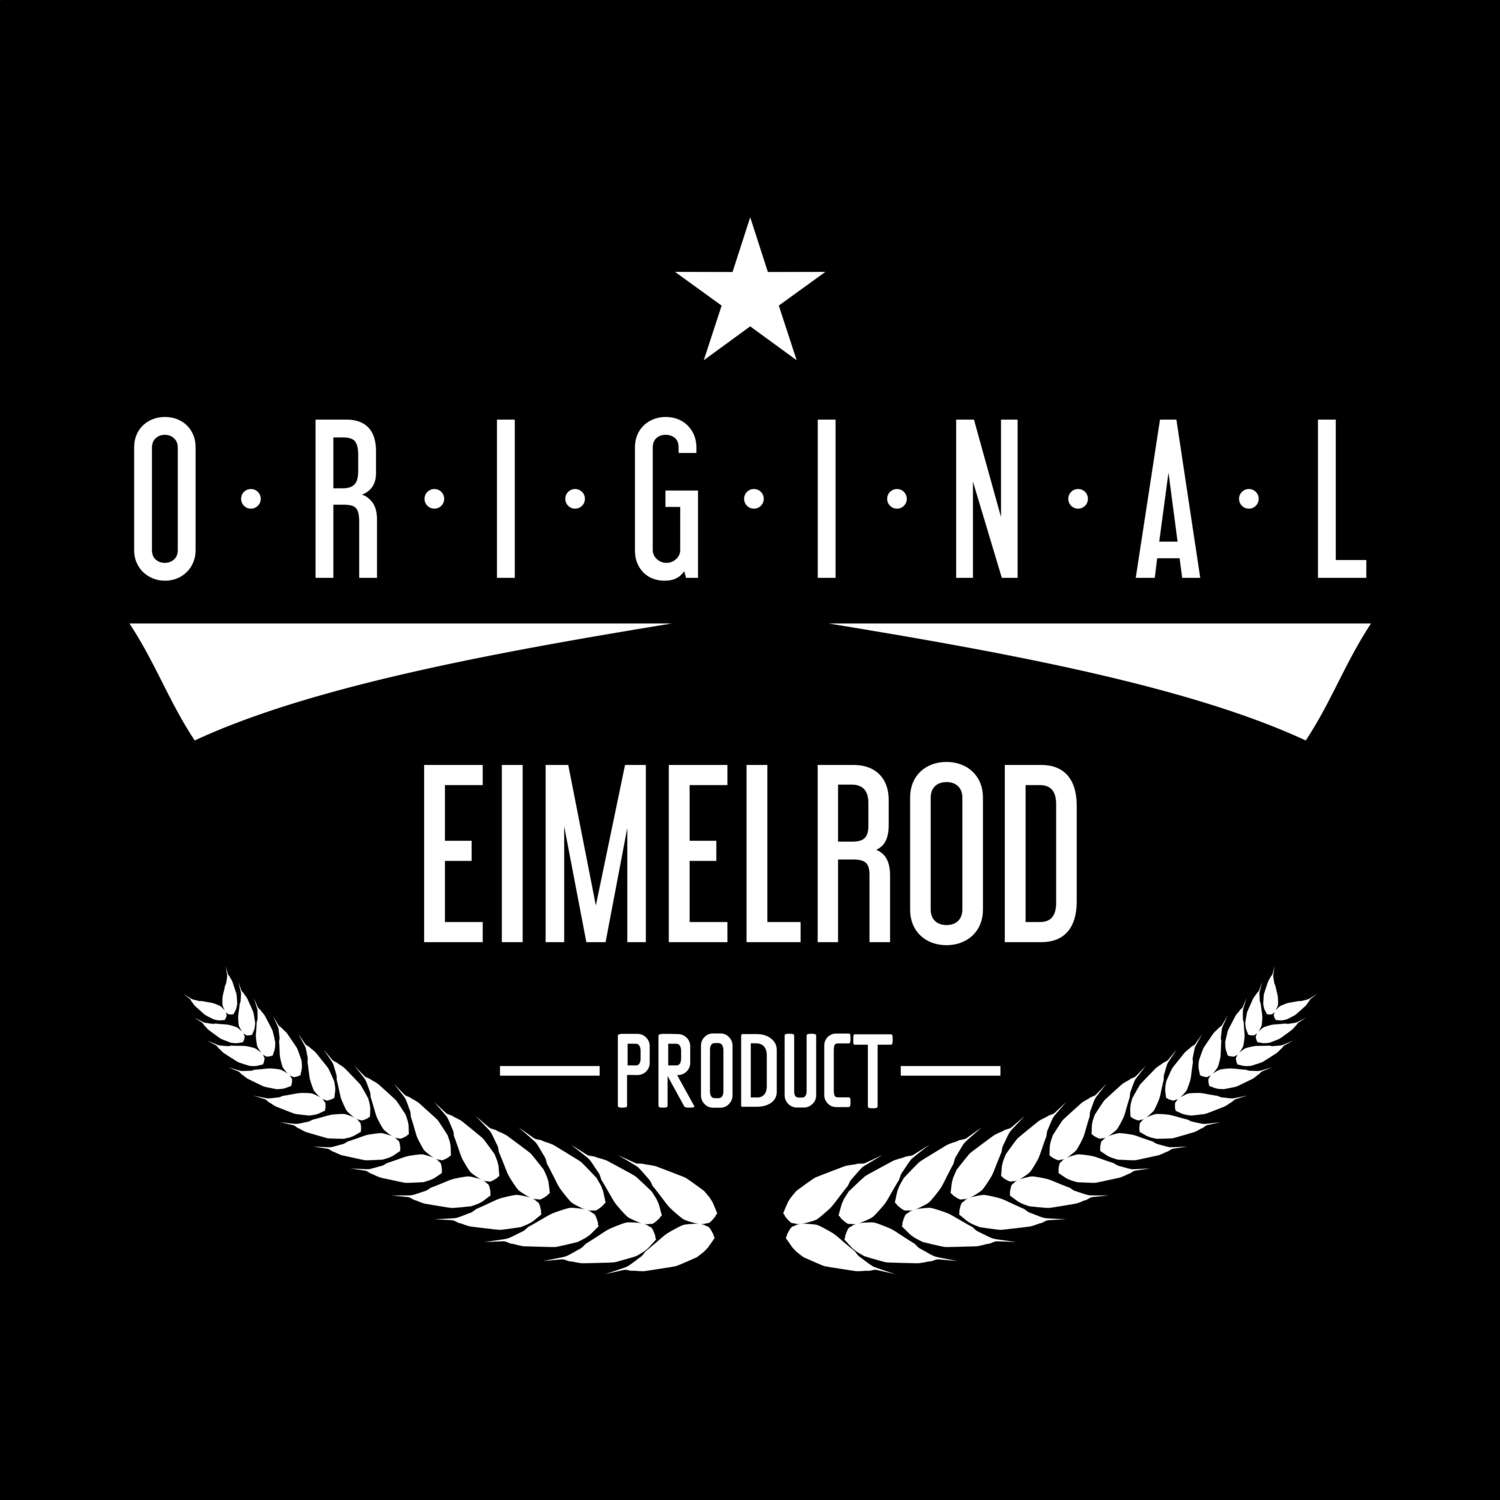 Eimelrod T-Shirt »Original Product«